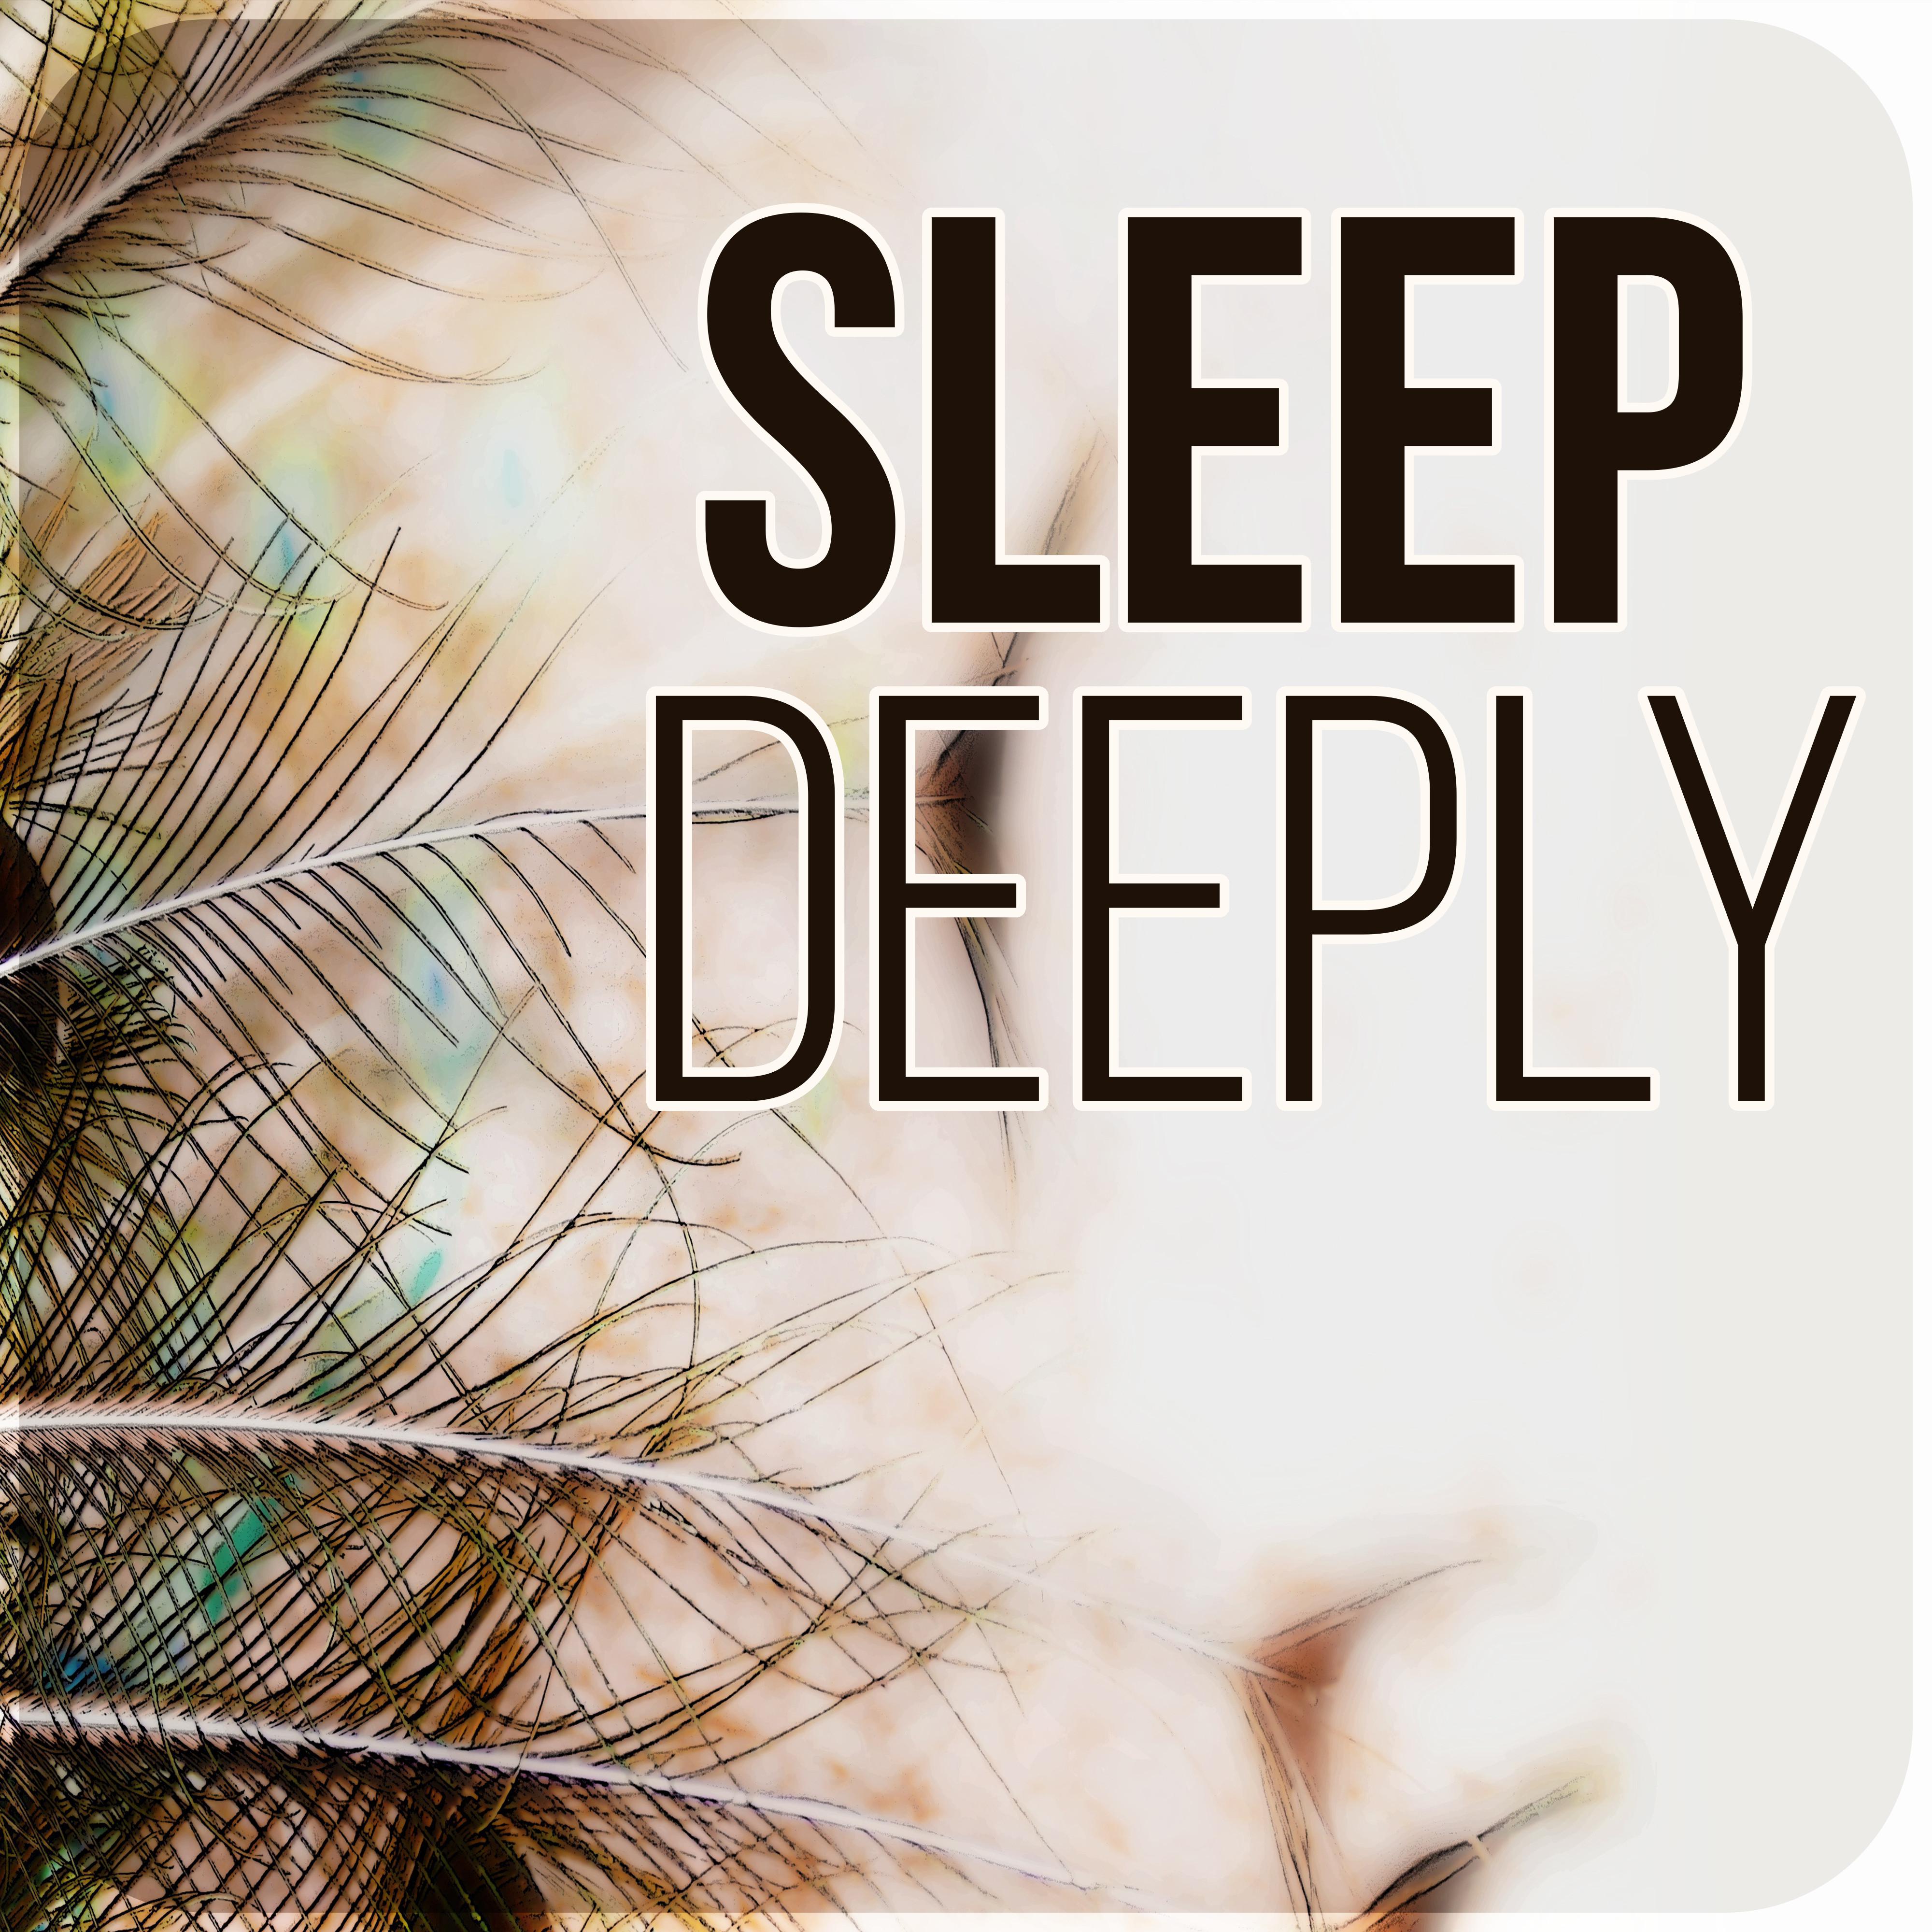 Sleep Deeply - Lullabies, Nature Sounds, Deep Sleep, Therapy Music, Sleep Music, Good Night, Rest and Relax, Well Being